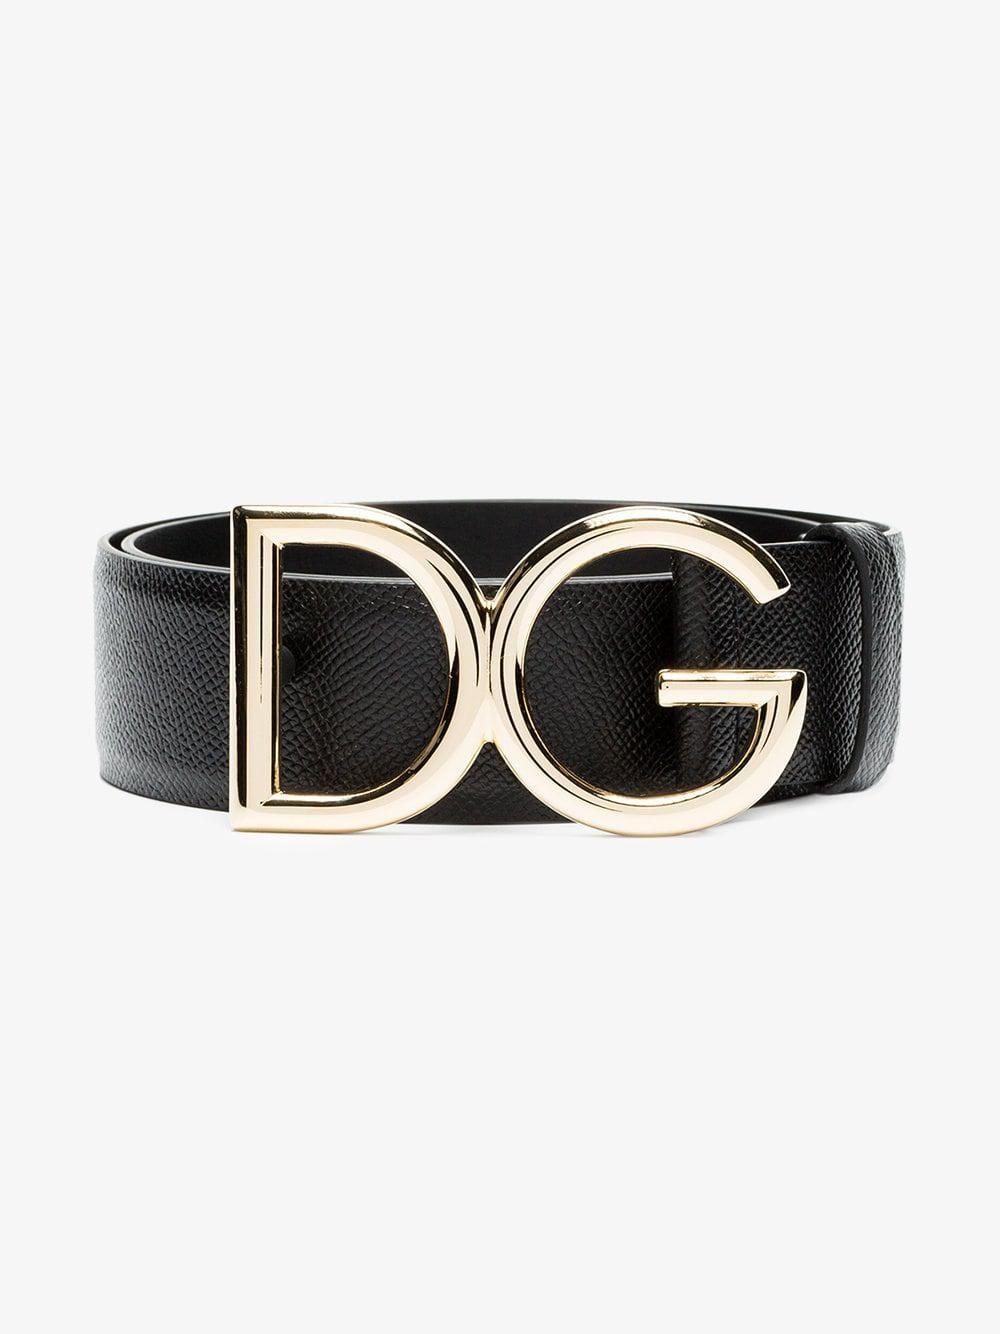 DG Fashion Logo - Dolce & Gabbana Dg Logo Pebbled Leather Belt in Black